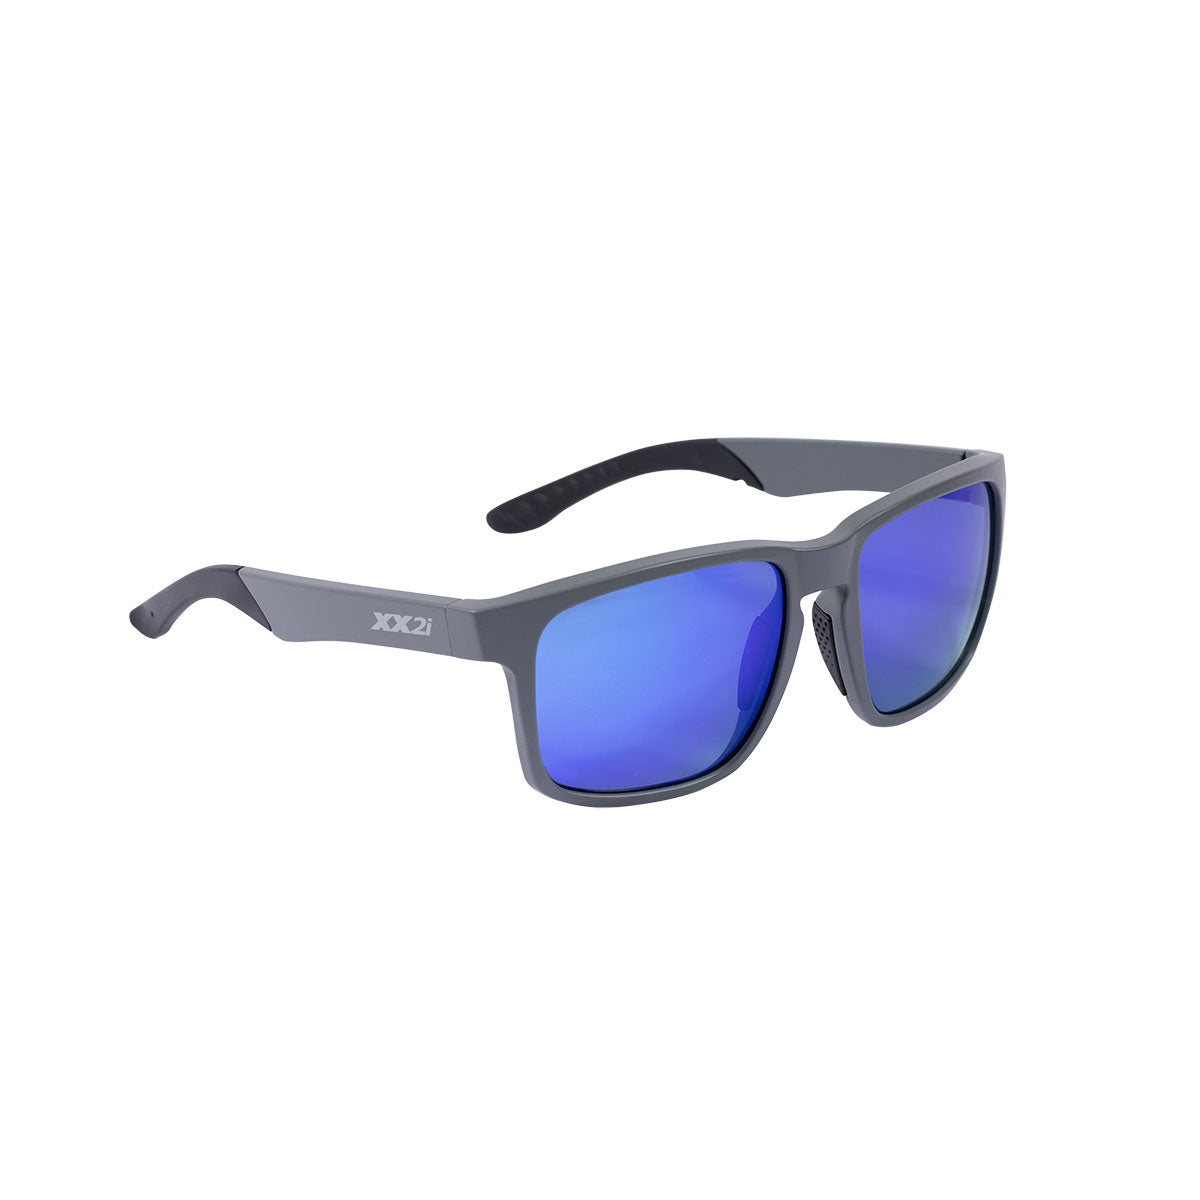 Key West R1 Lifestyle Sunglasses by Optics XX2i